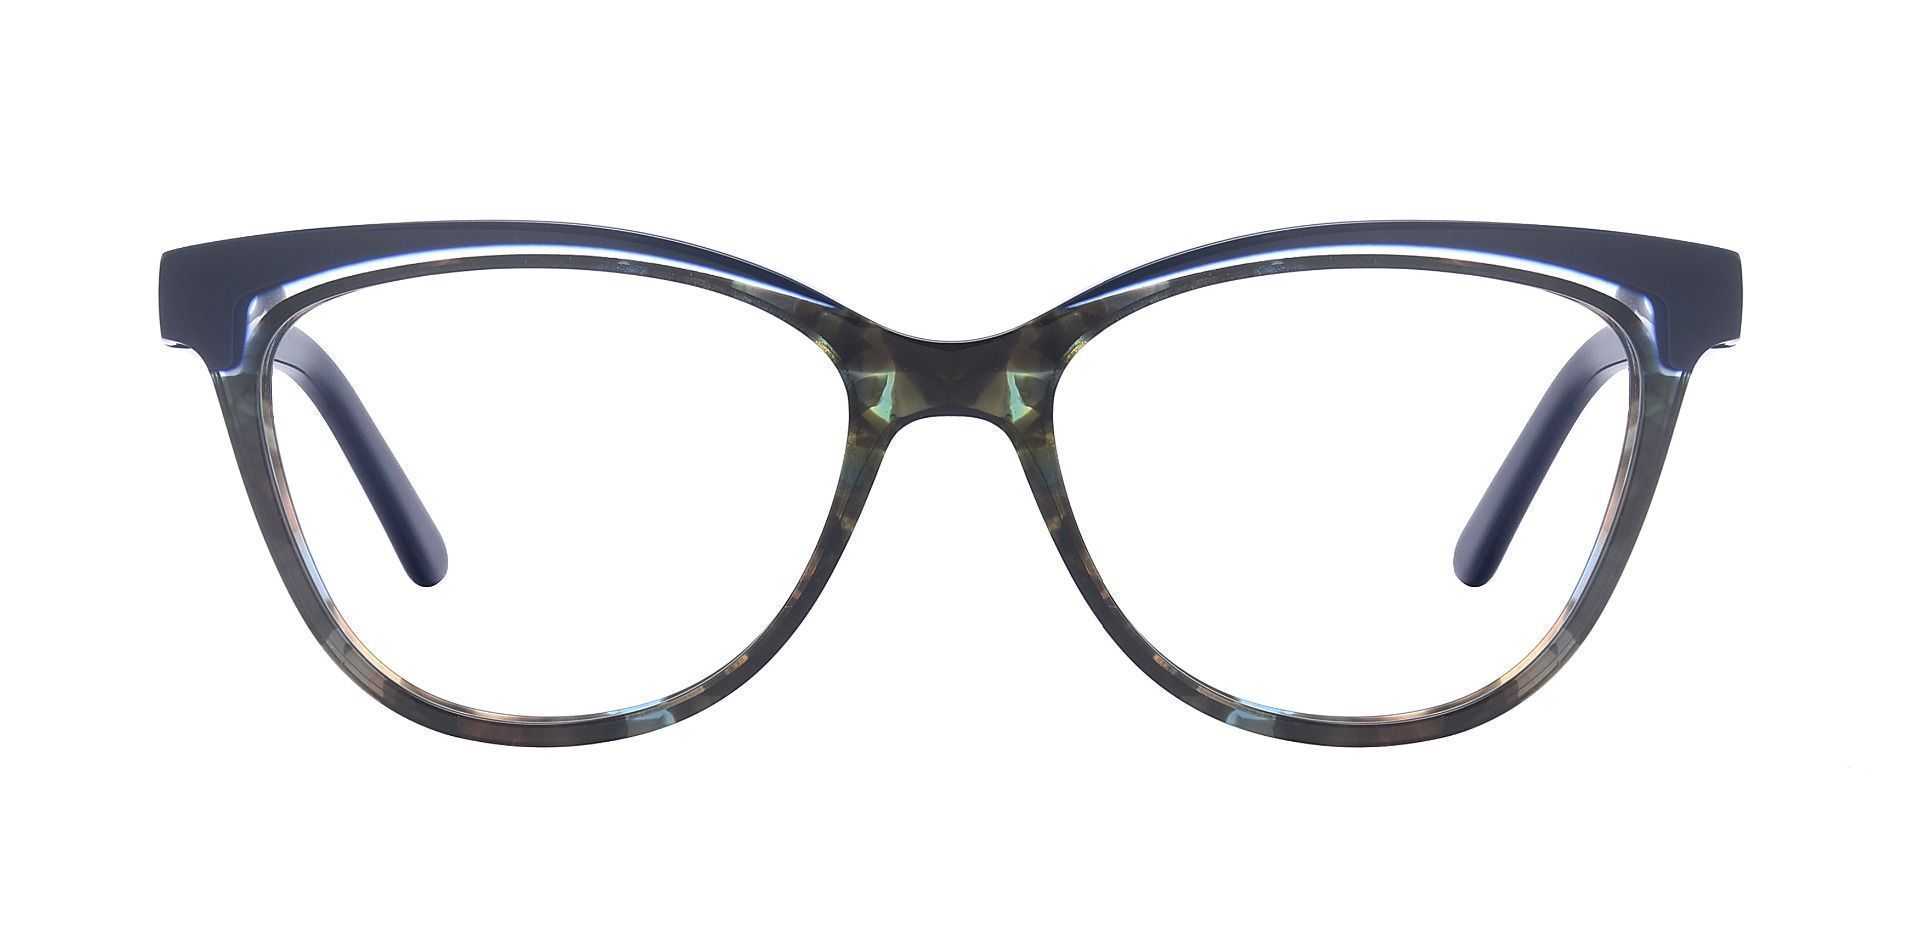 Fleck Cat-Eye Prescription Glasses - Floral | Women's Eyeglasses ...